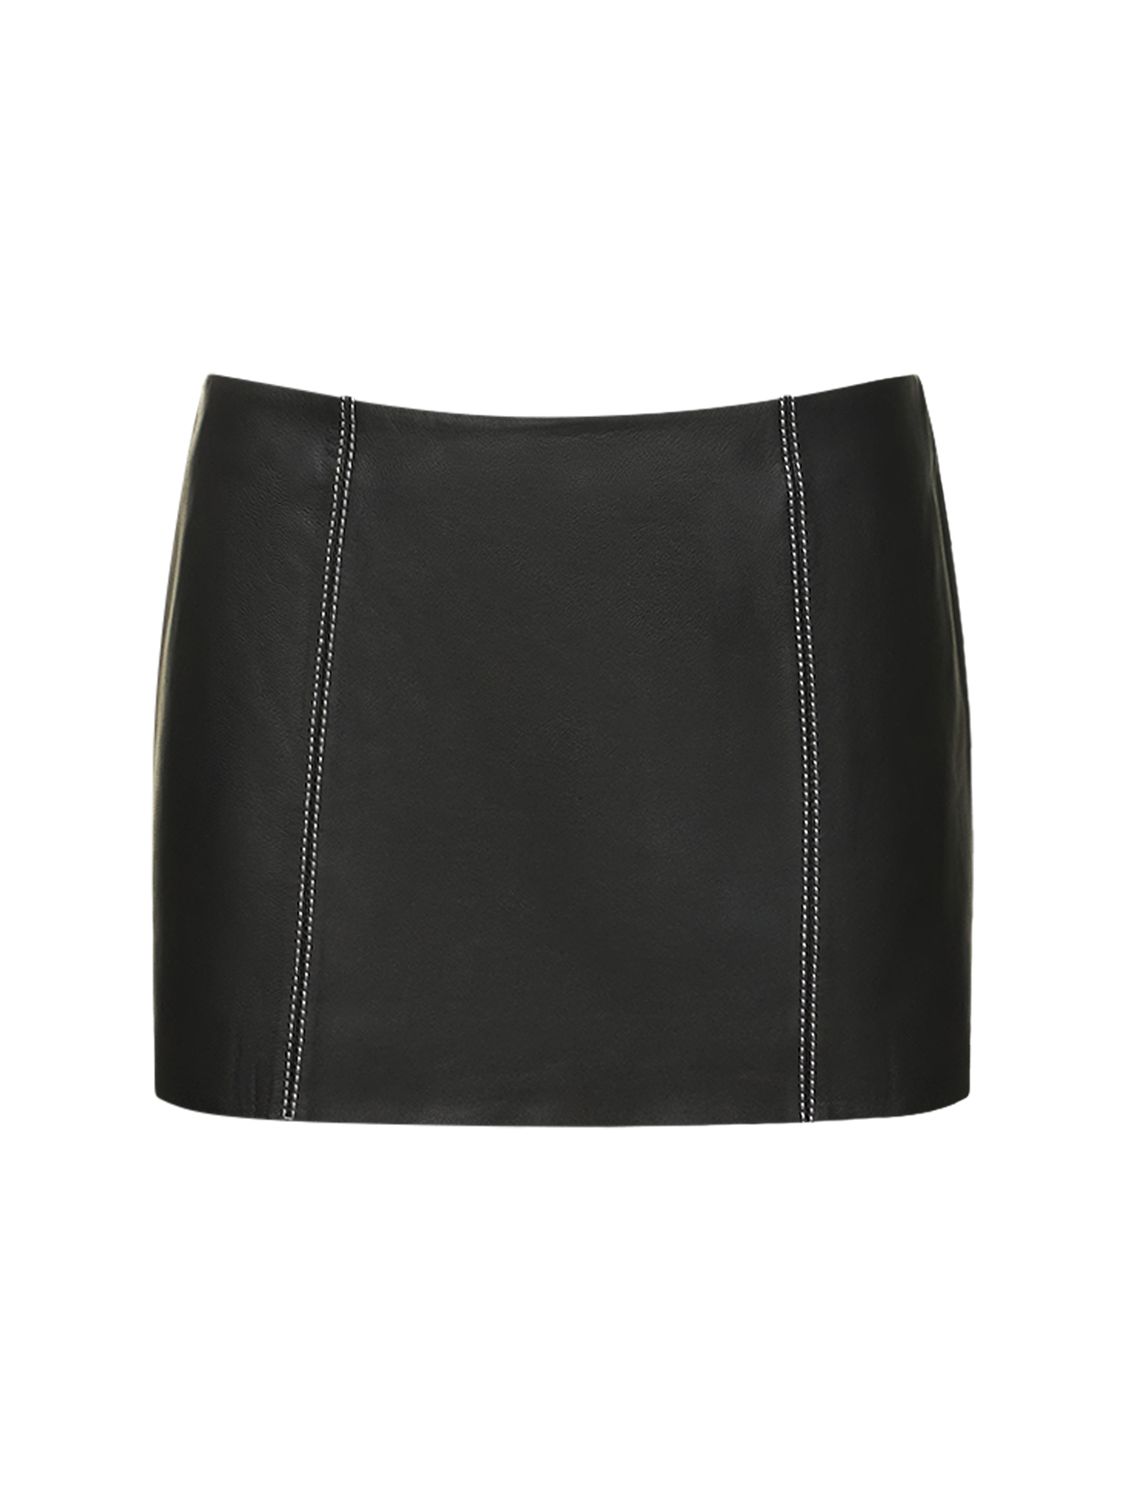 Veda Veranda Low Rise Leather Mini Skirt